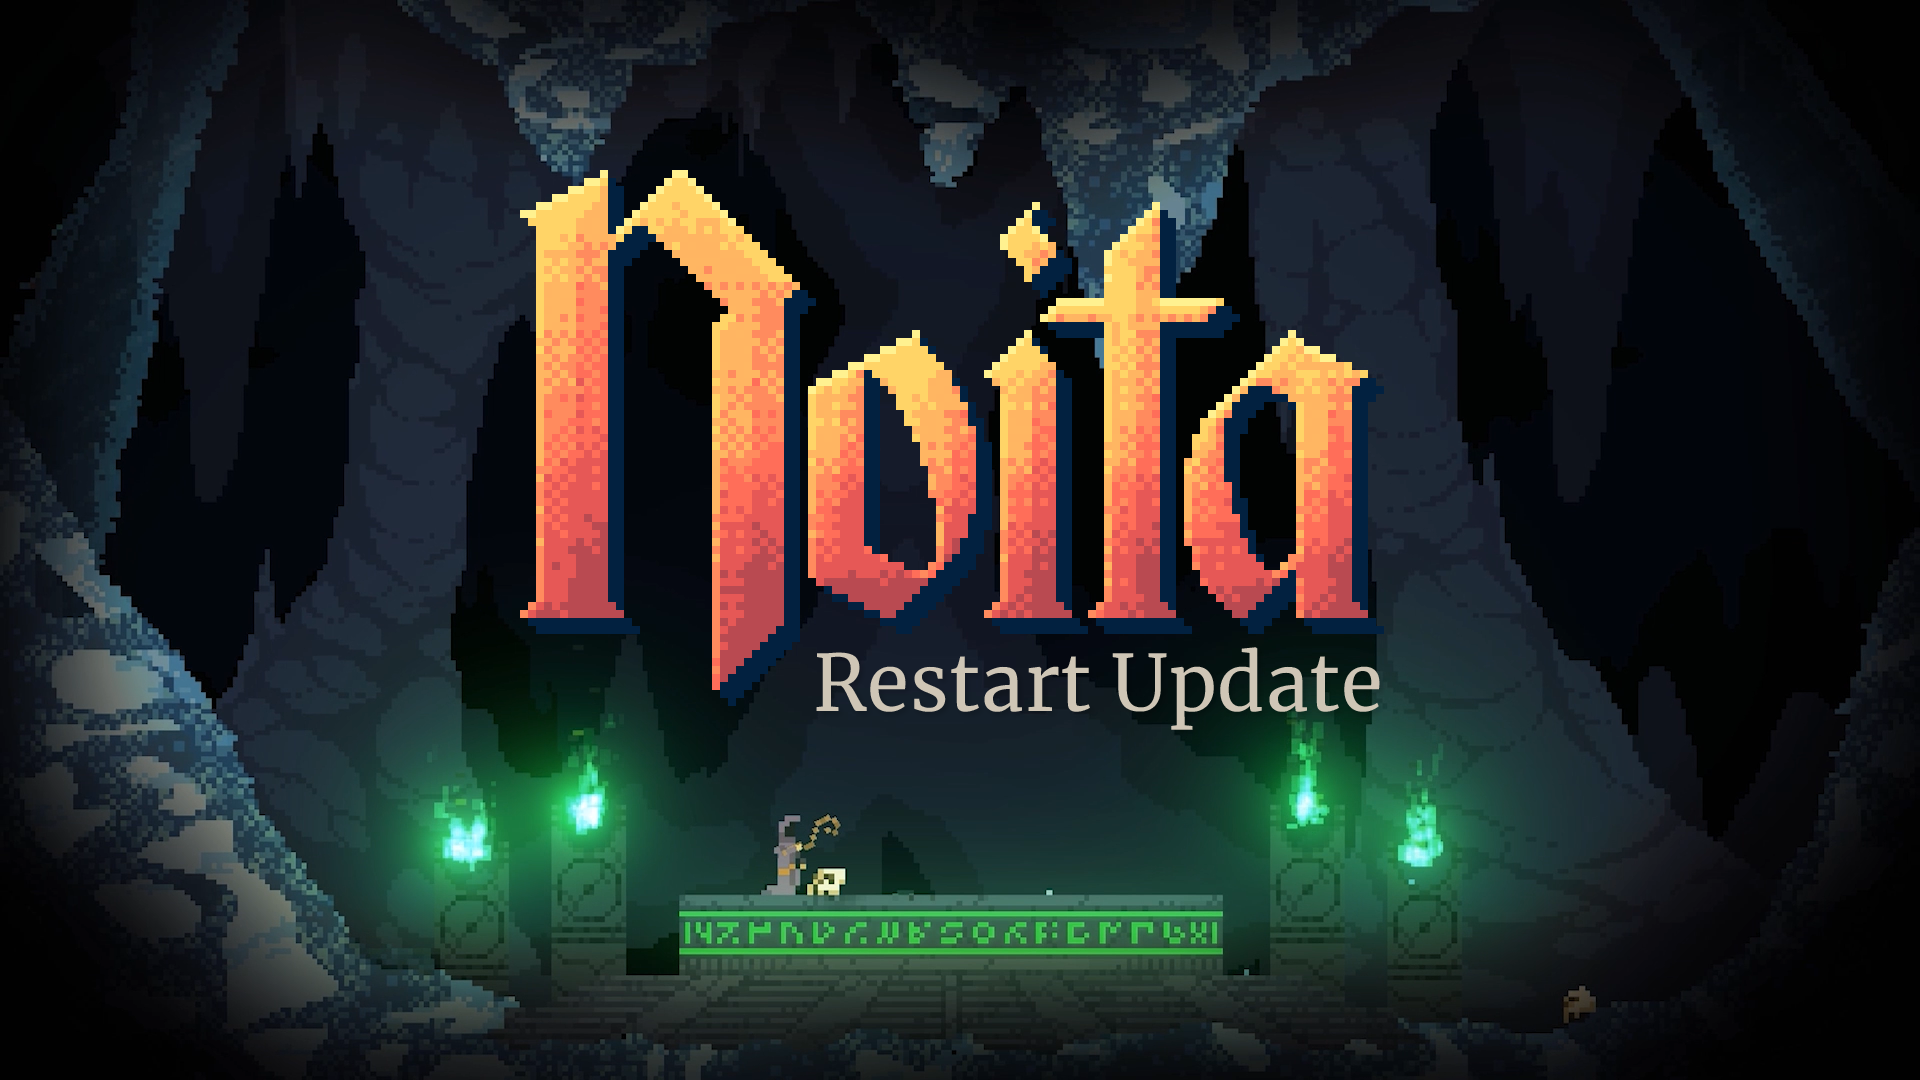 Restart Update Noita By Nolla Games